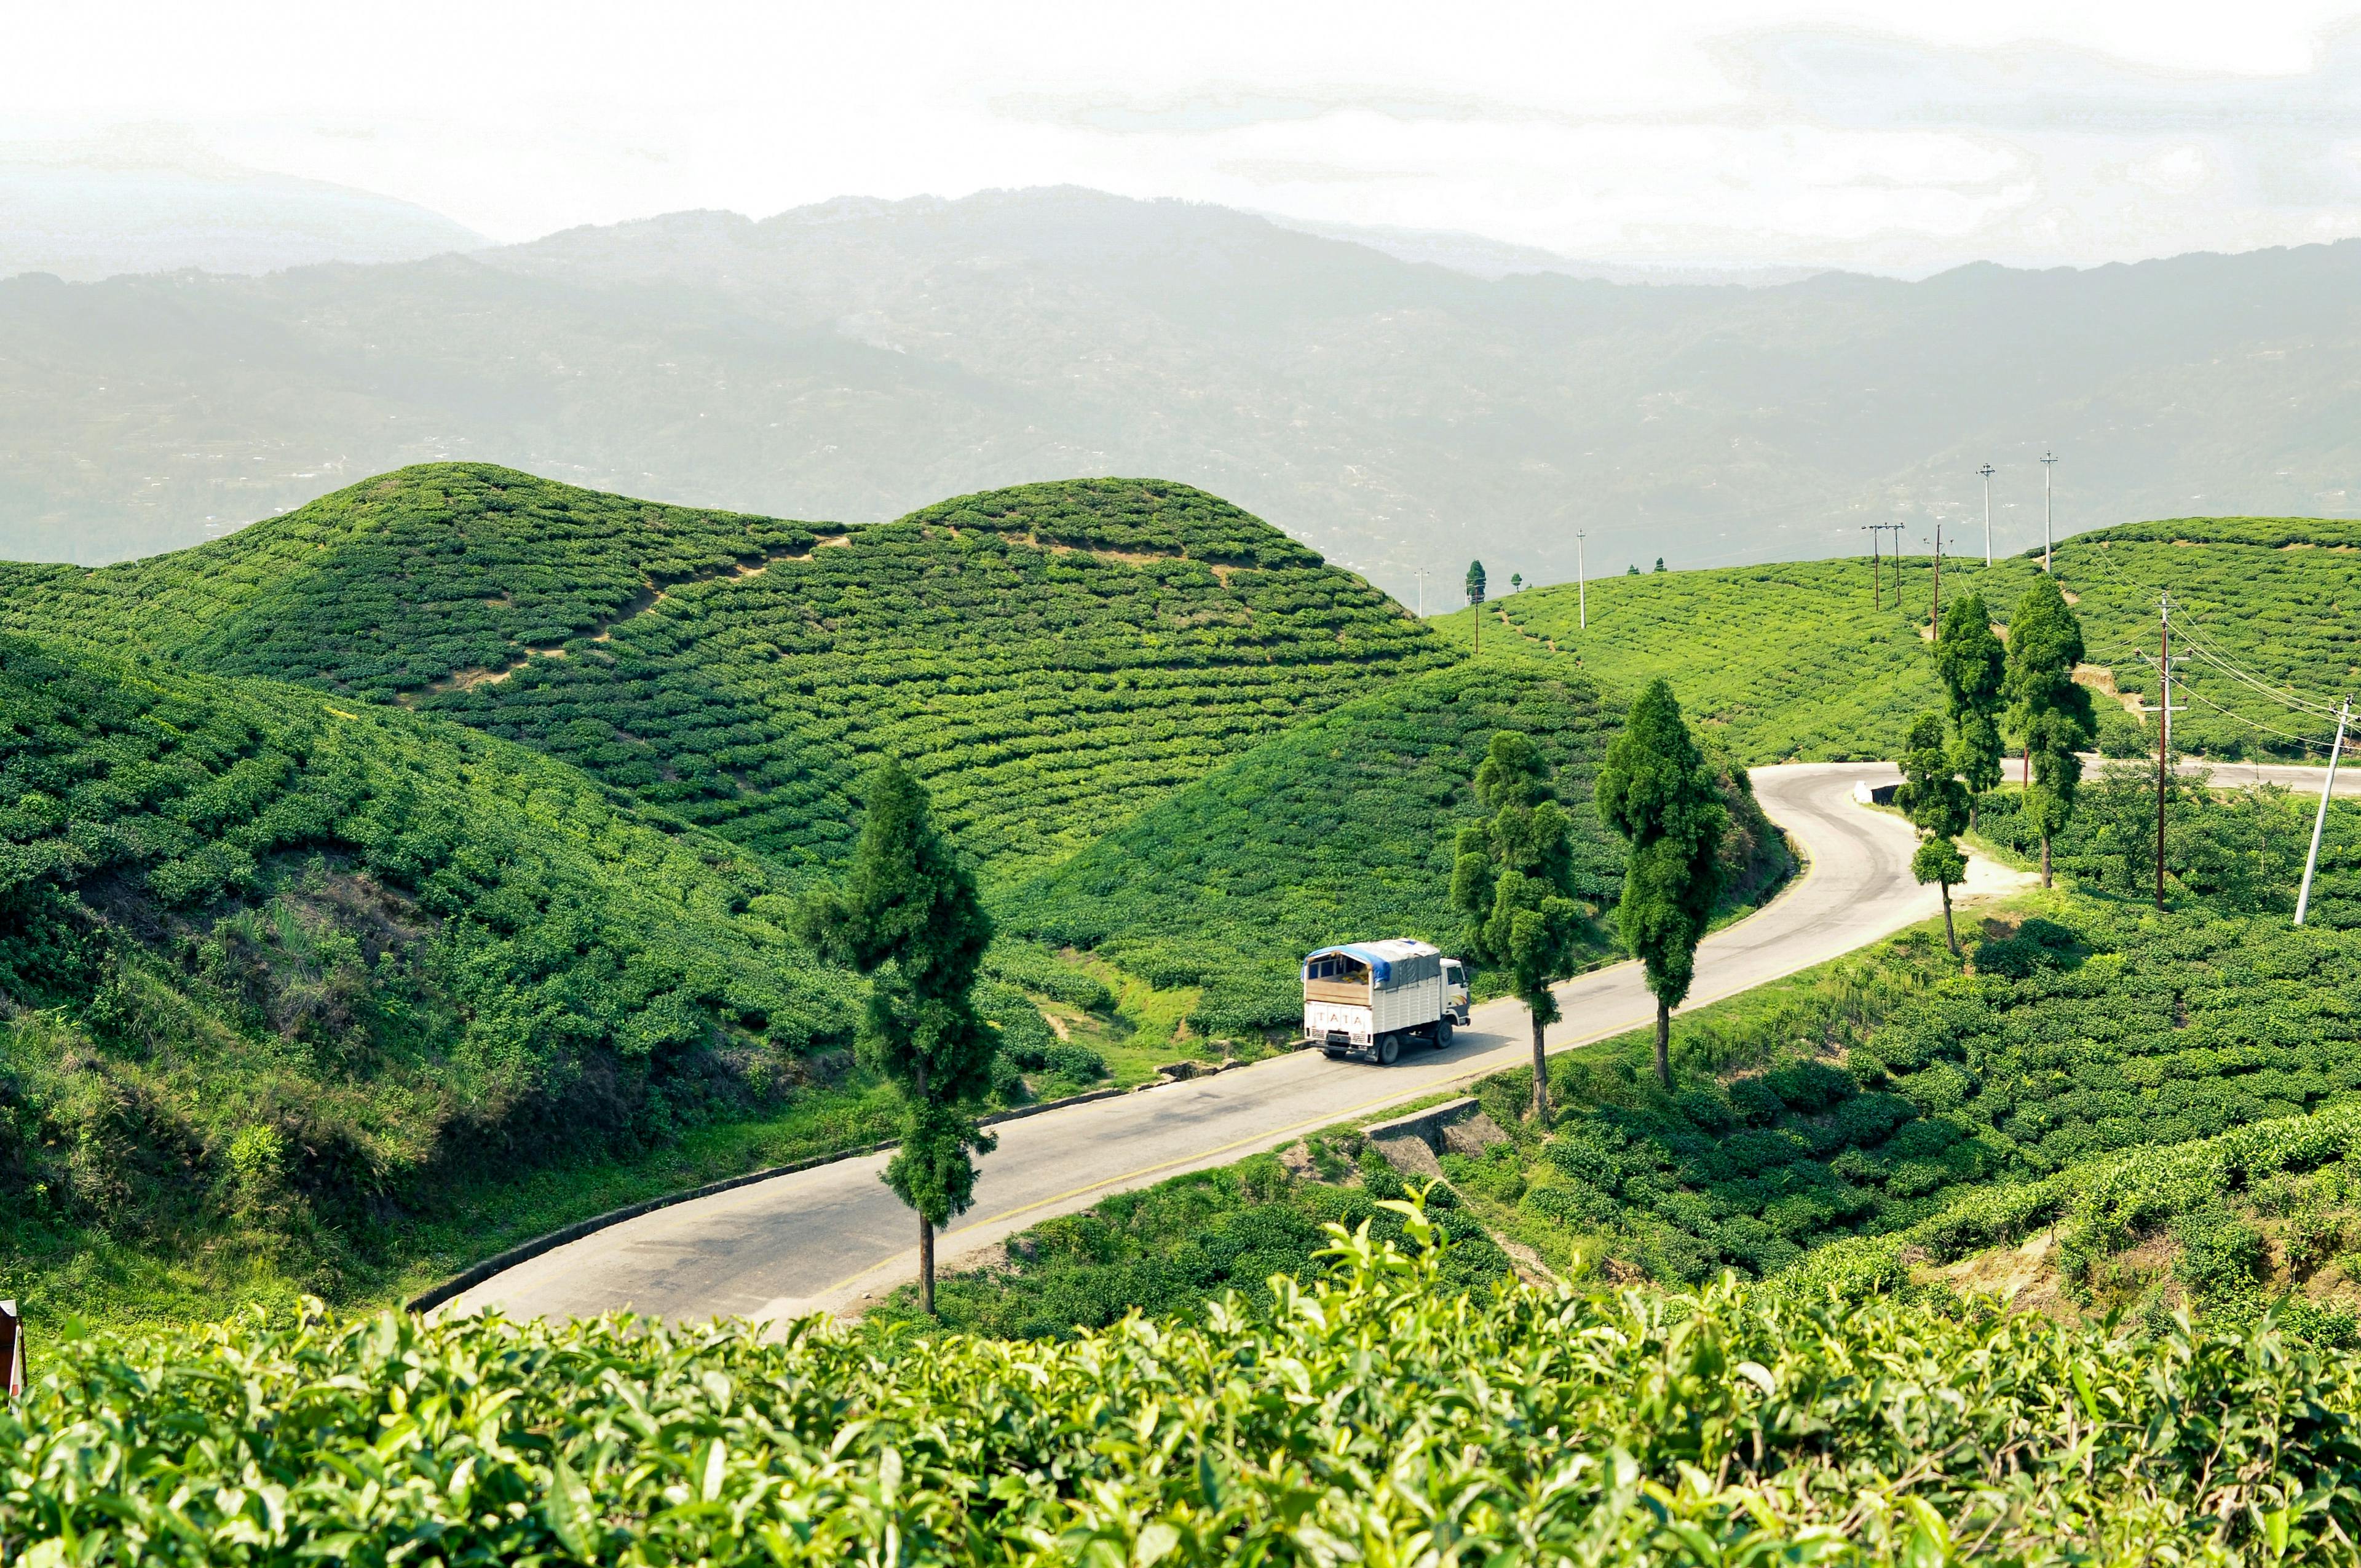 Bus traveling through tea field in Eastern Nepal